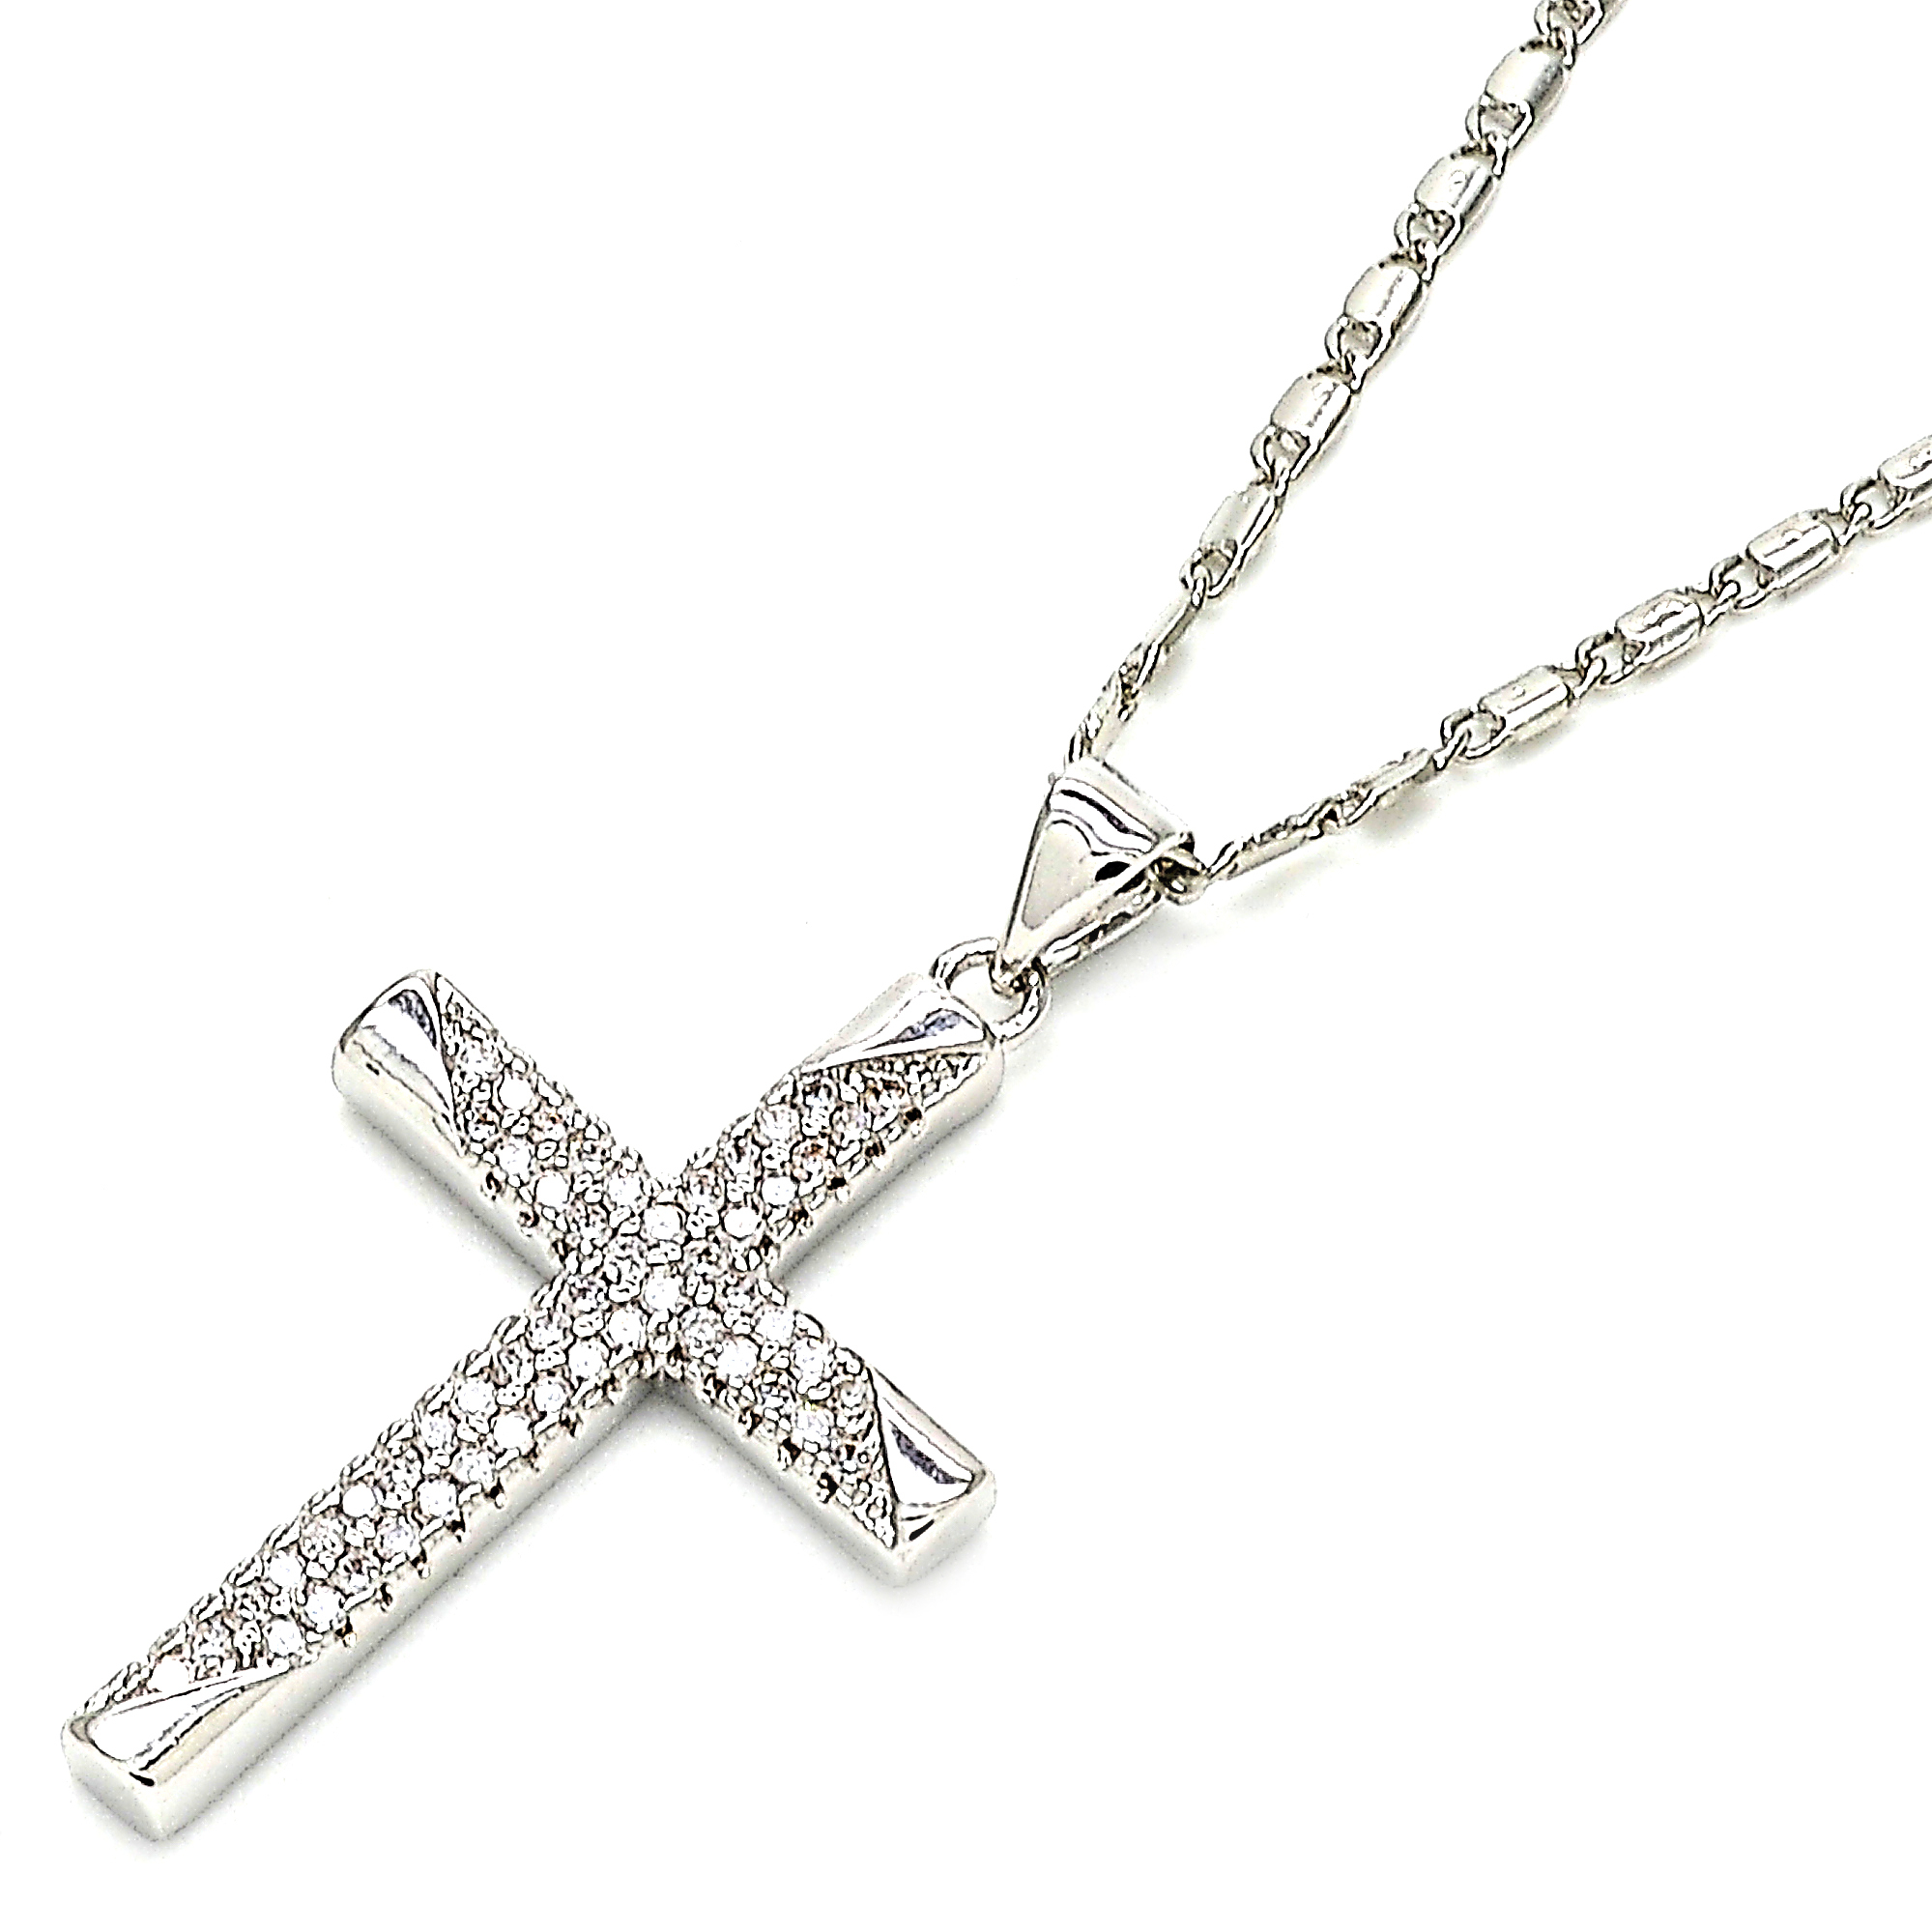 Rhodium Filled High Polish Finsh Fancy Necklace, Cross Design, With Crystal, Rhodium Tone